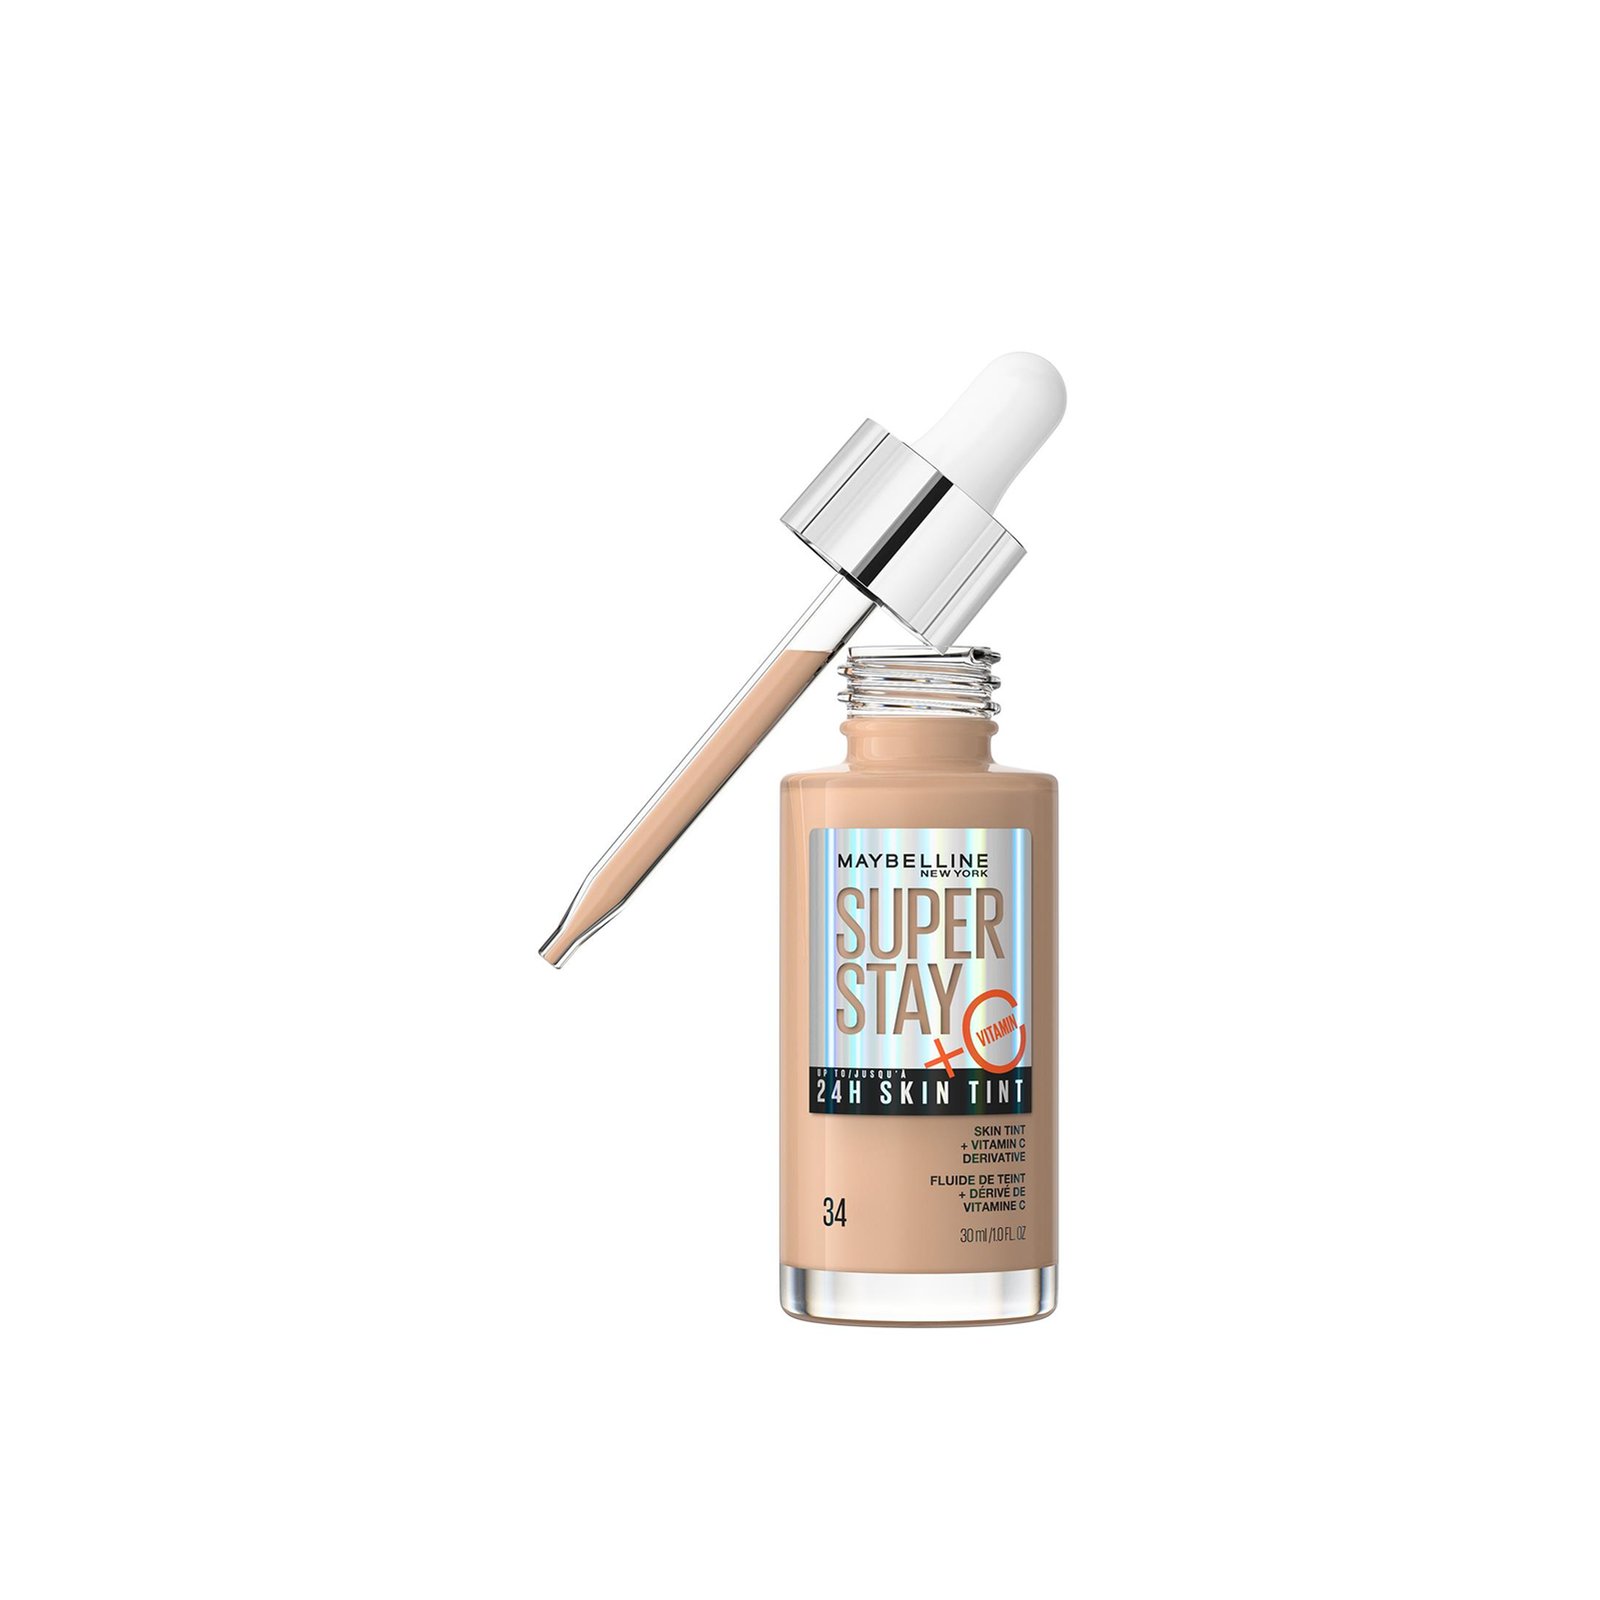 Buy Maybelline Super Stay 24H Skin Tint Foundation 34 30ml (1.0 fl oz) · USA